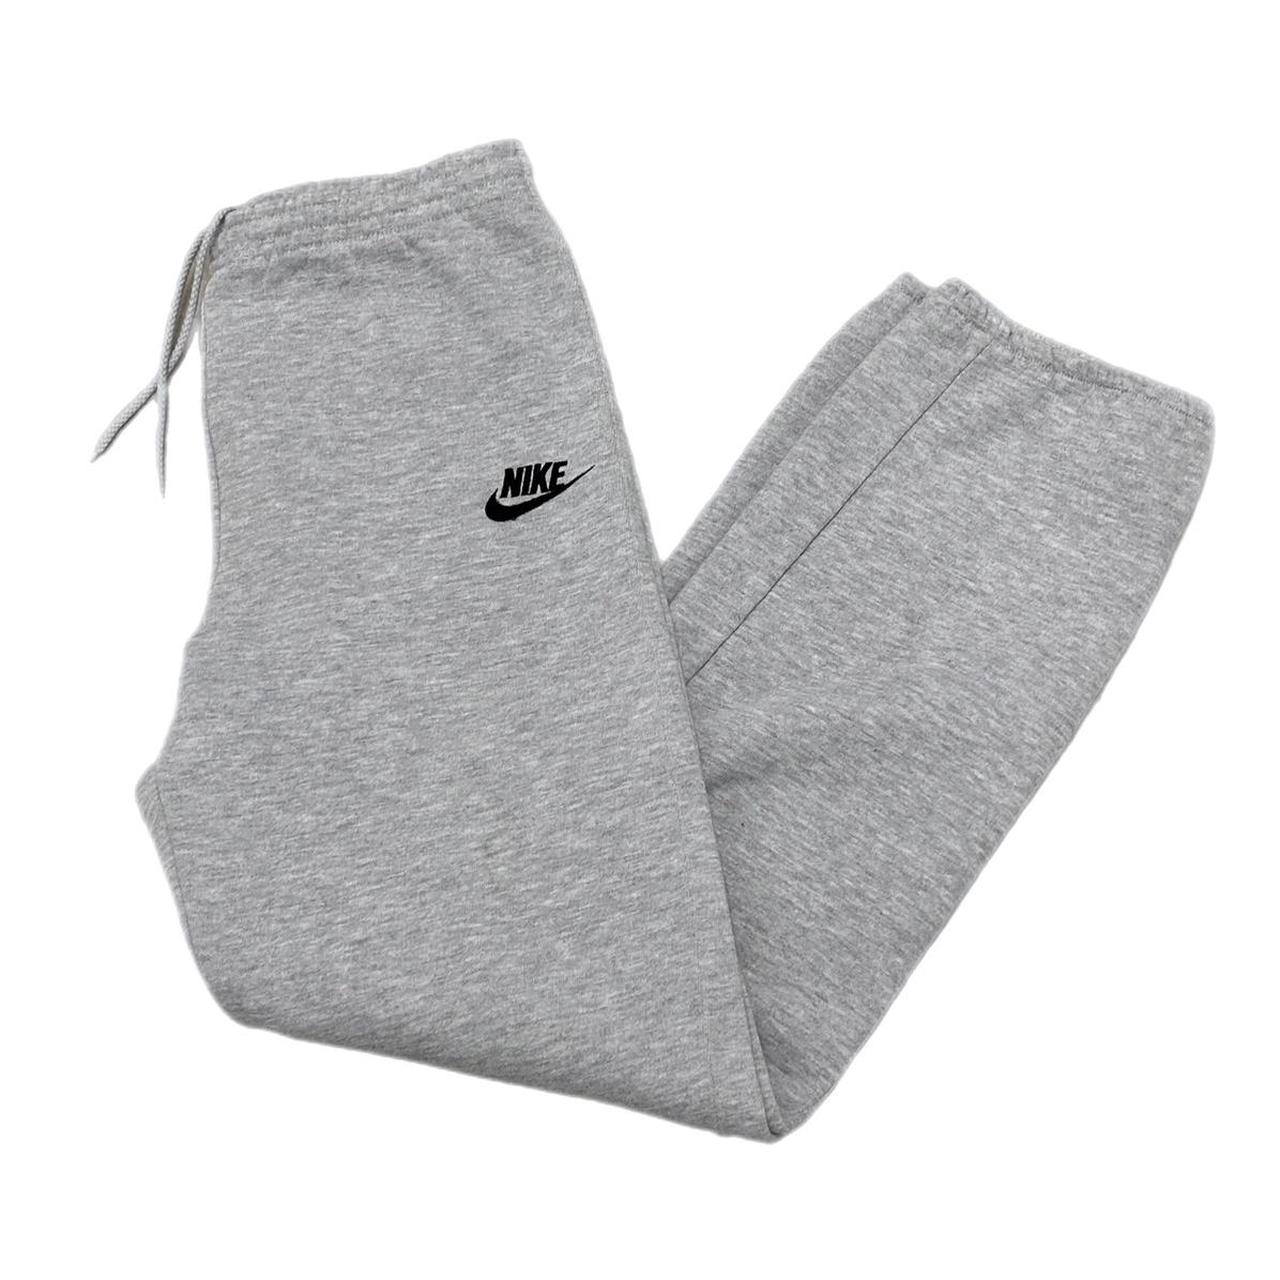 Vintage Nike Sweatpants Jet Black Polyester White Swoosh Has Ankle